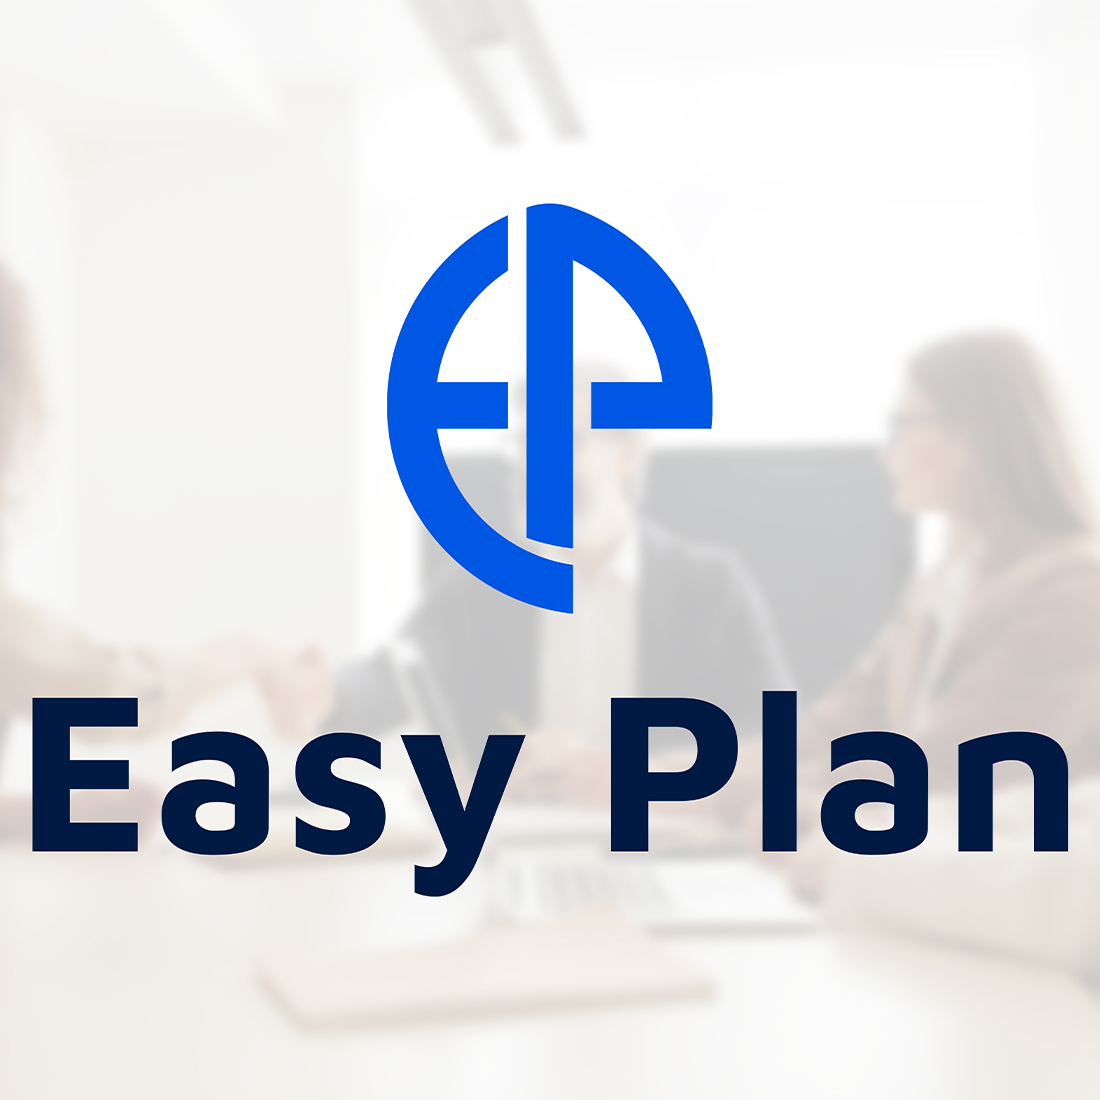 easy plan logo 7 305